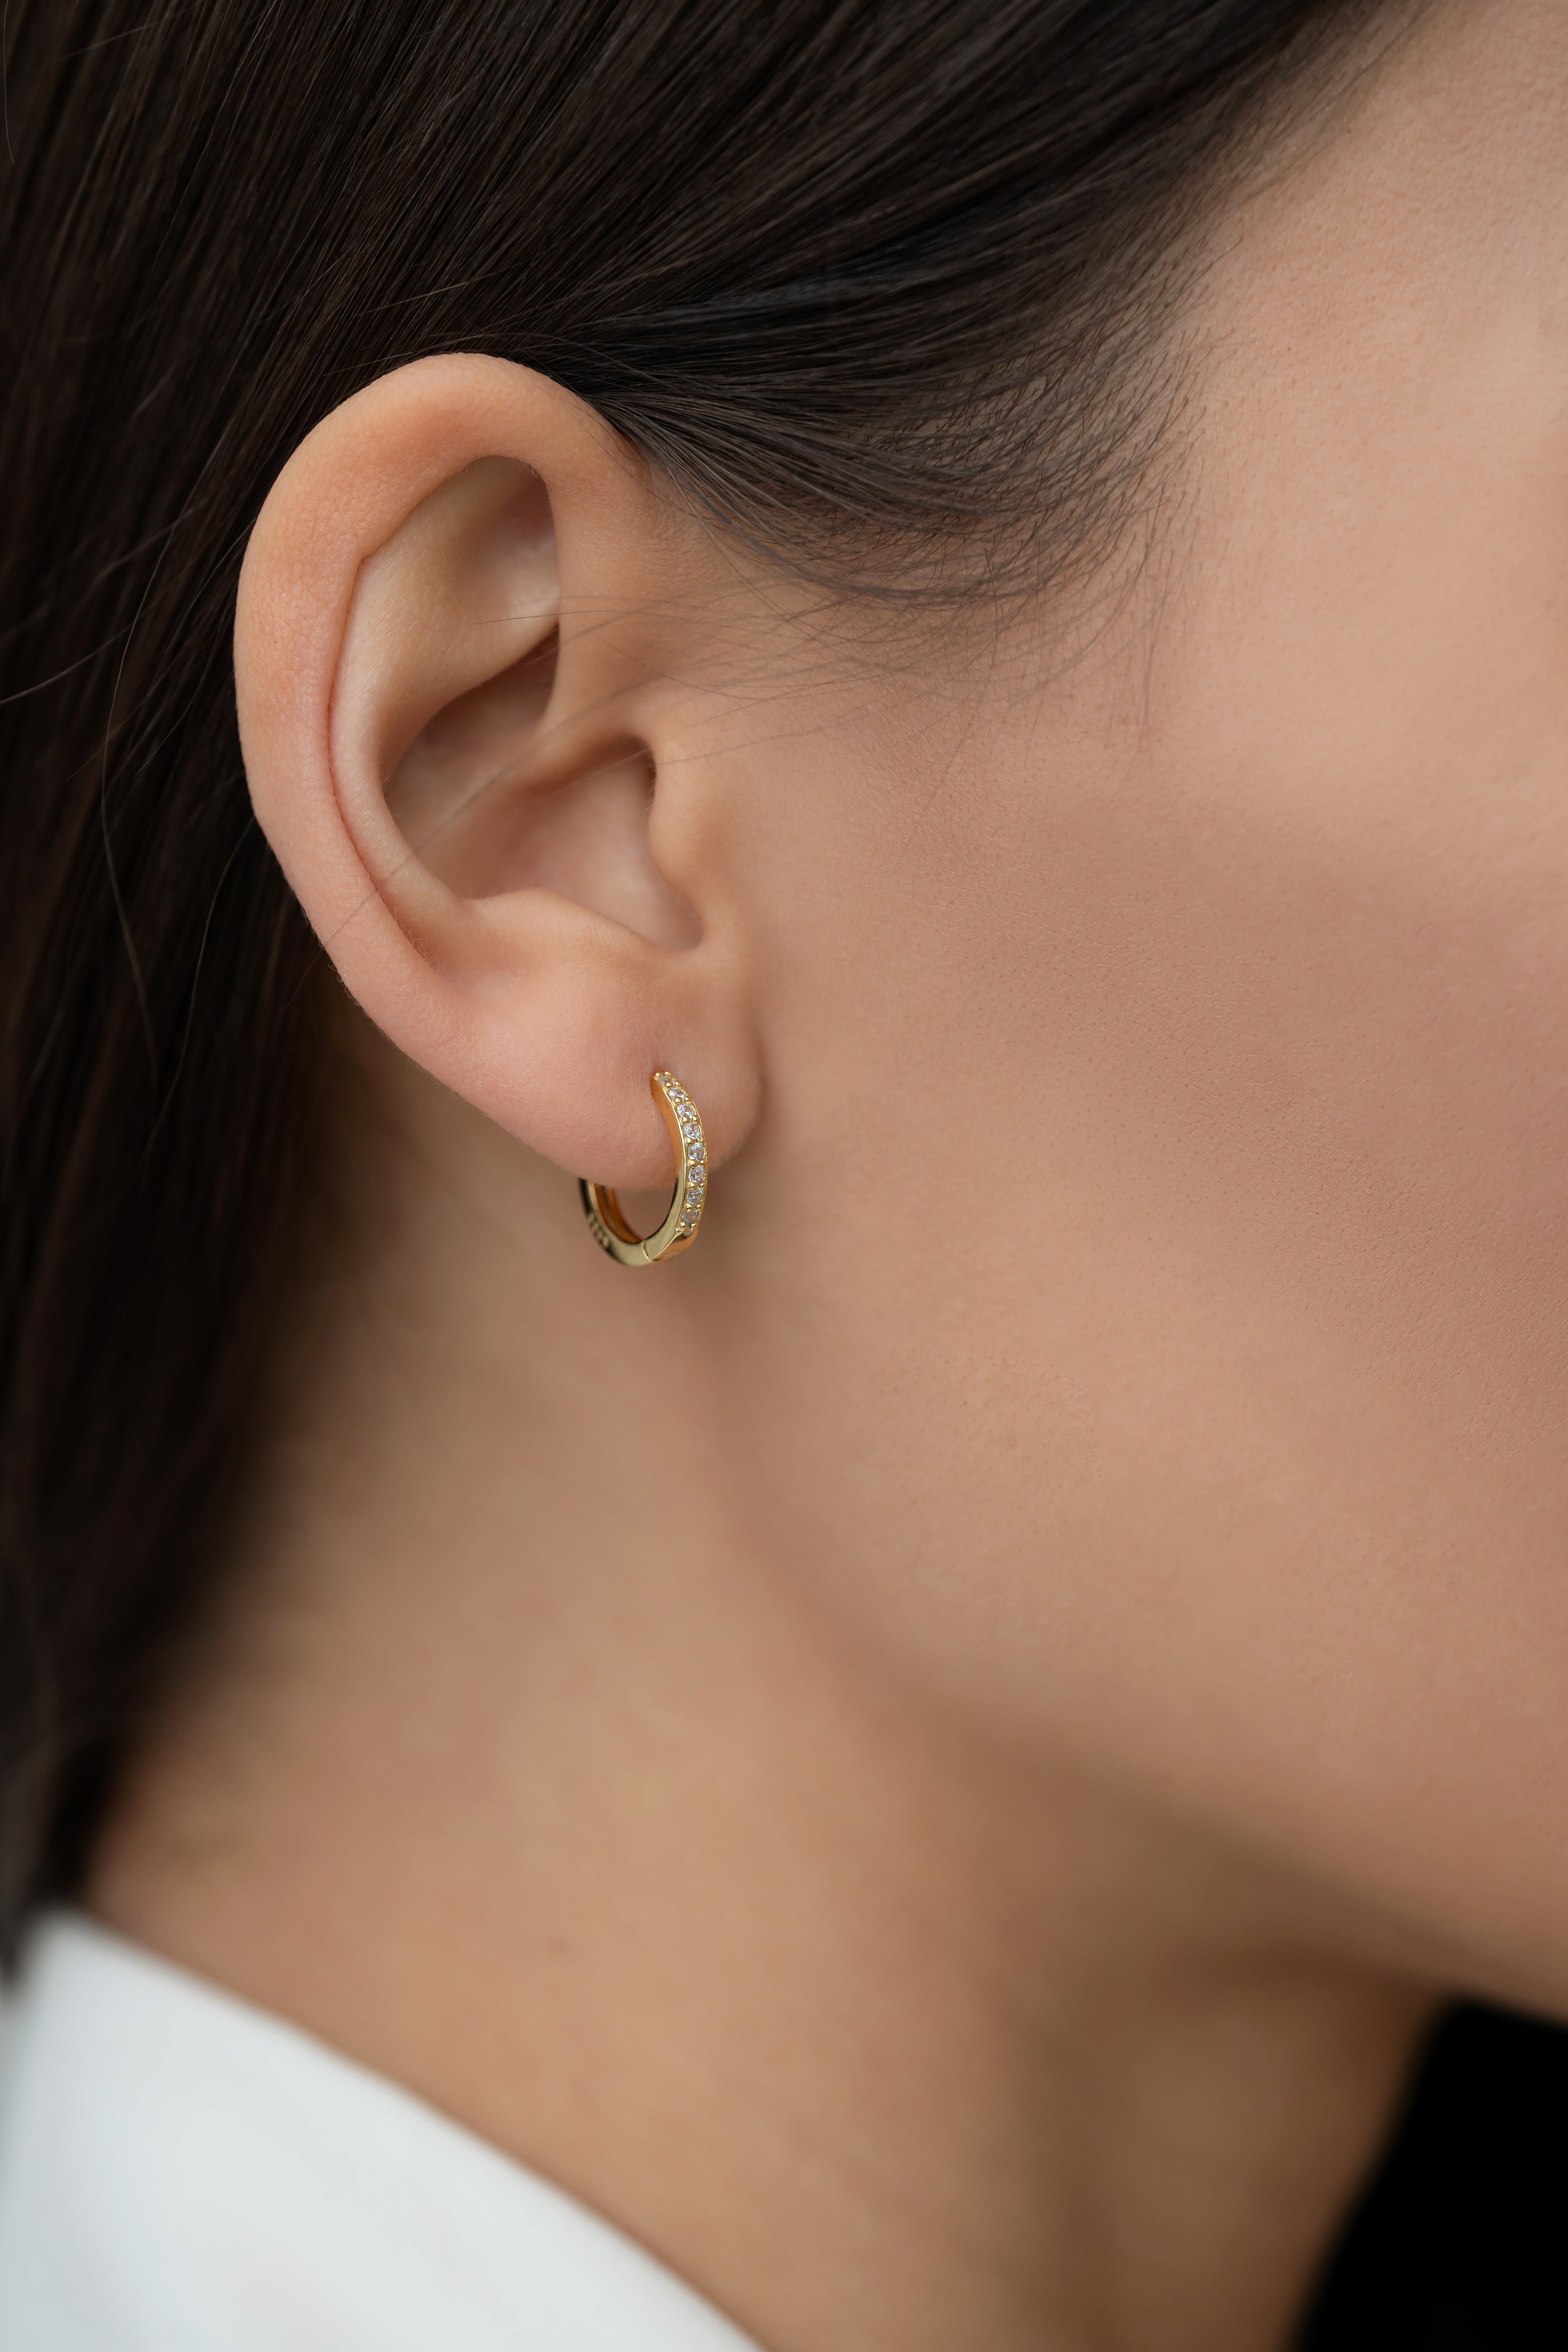 Gold-plated earrings SHINY HOOP 925 sidabras